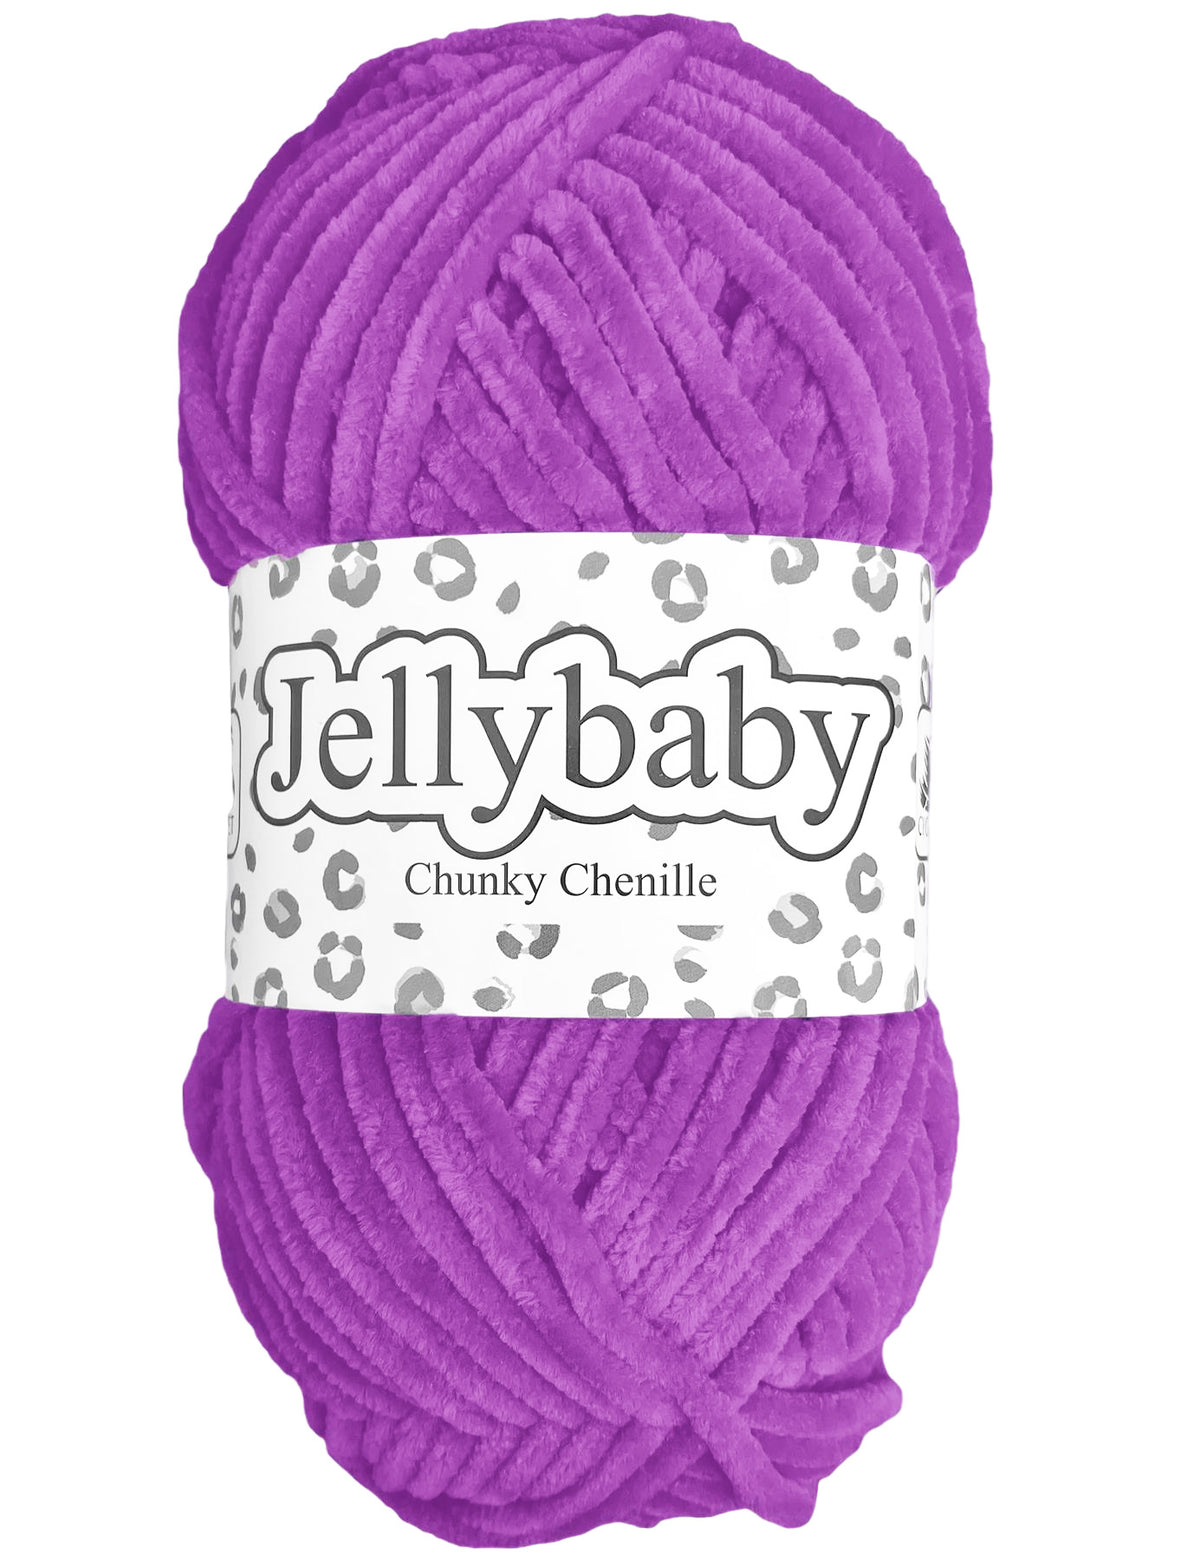 Cygnet Jellybaby Chenille Chunky Pesky Purple (032) -100g